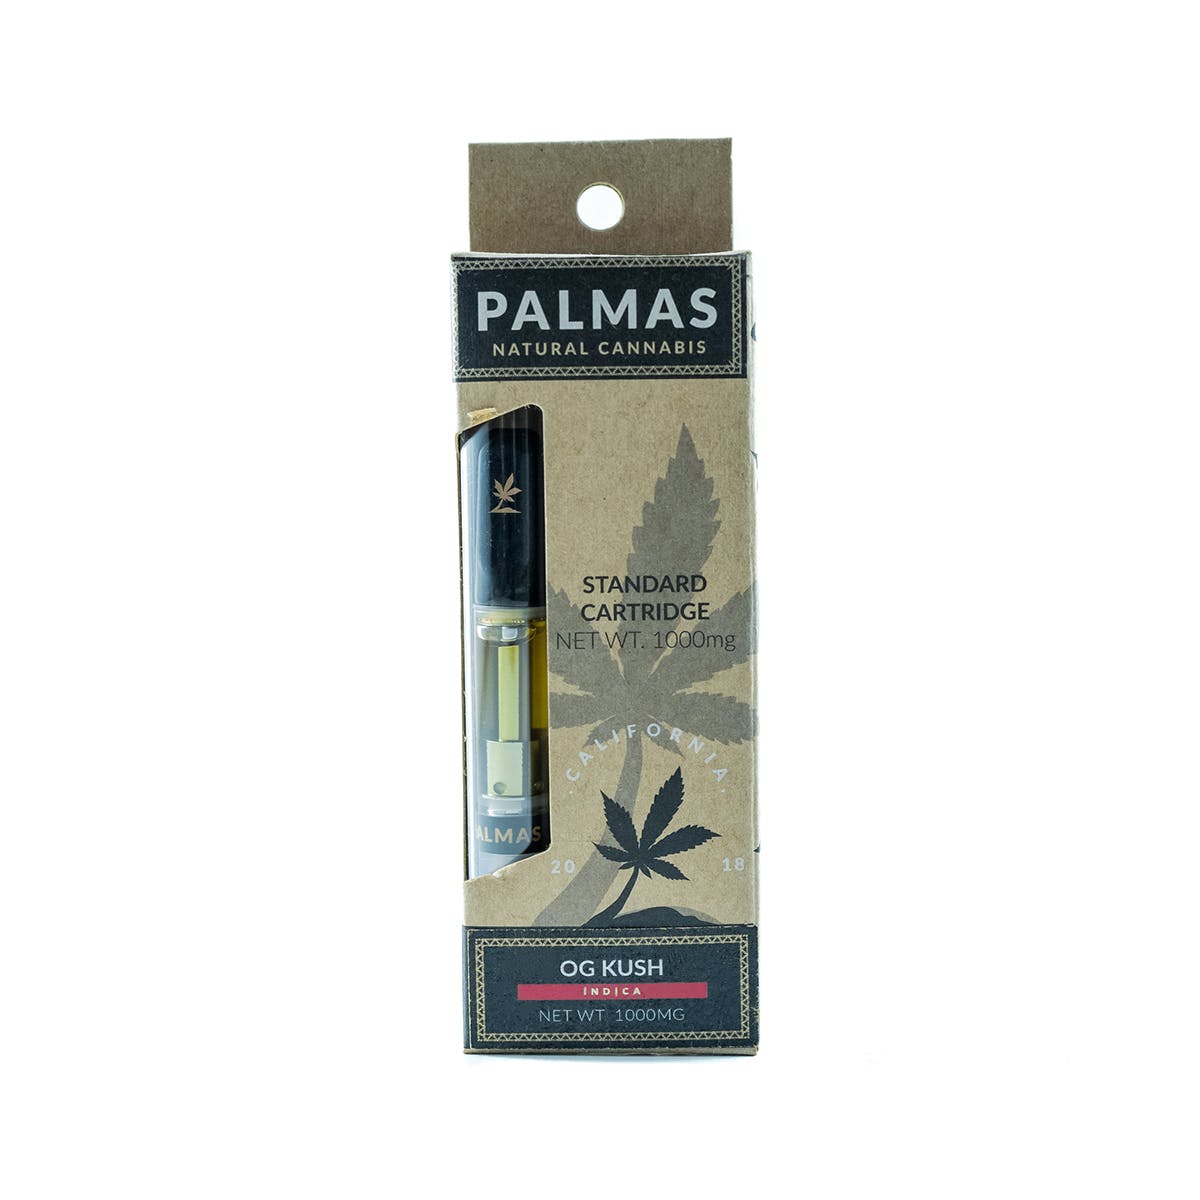 marijuana-dispensaries-azusas-finest-in-azusa-palmas-standard-cartridge-og-kush